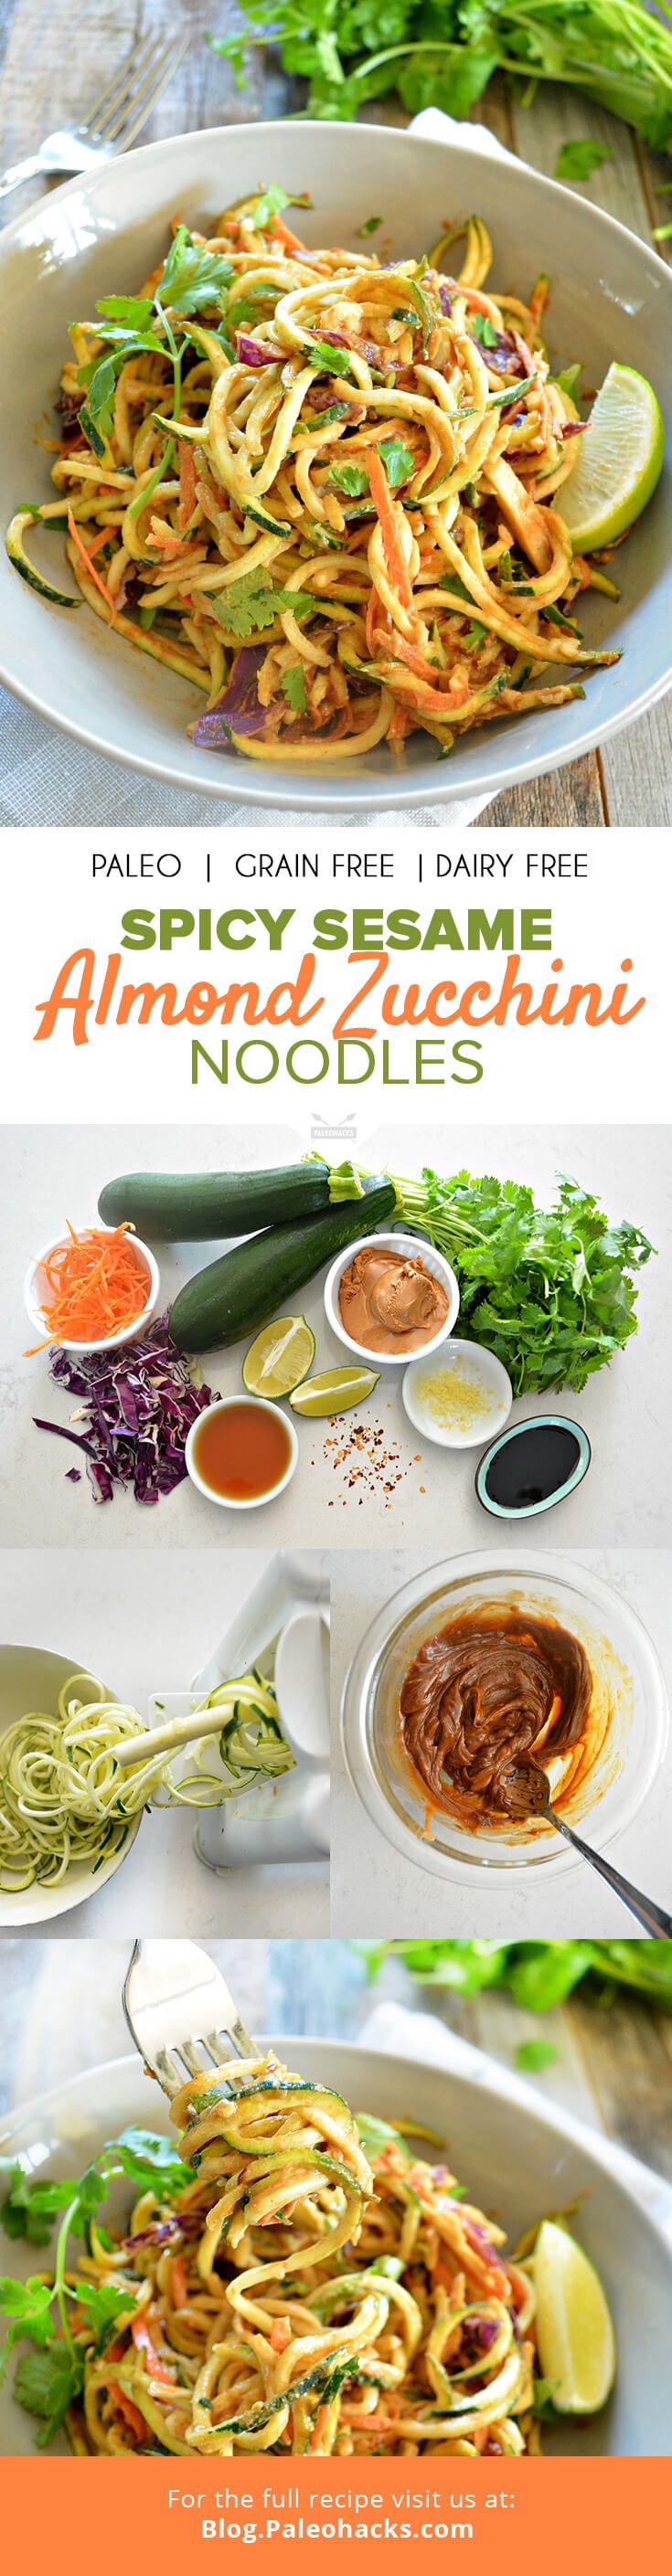 almond zucchini noodles pin